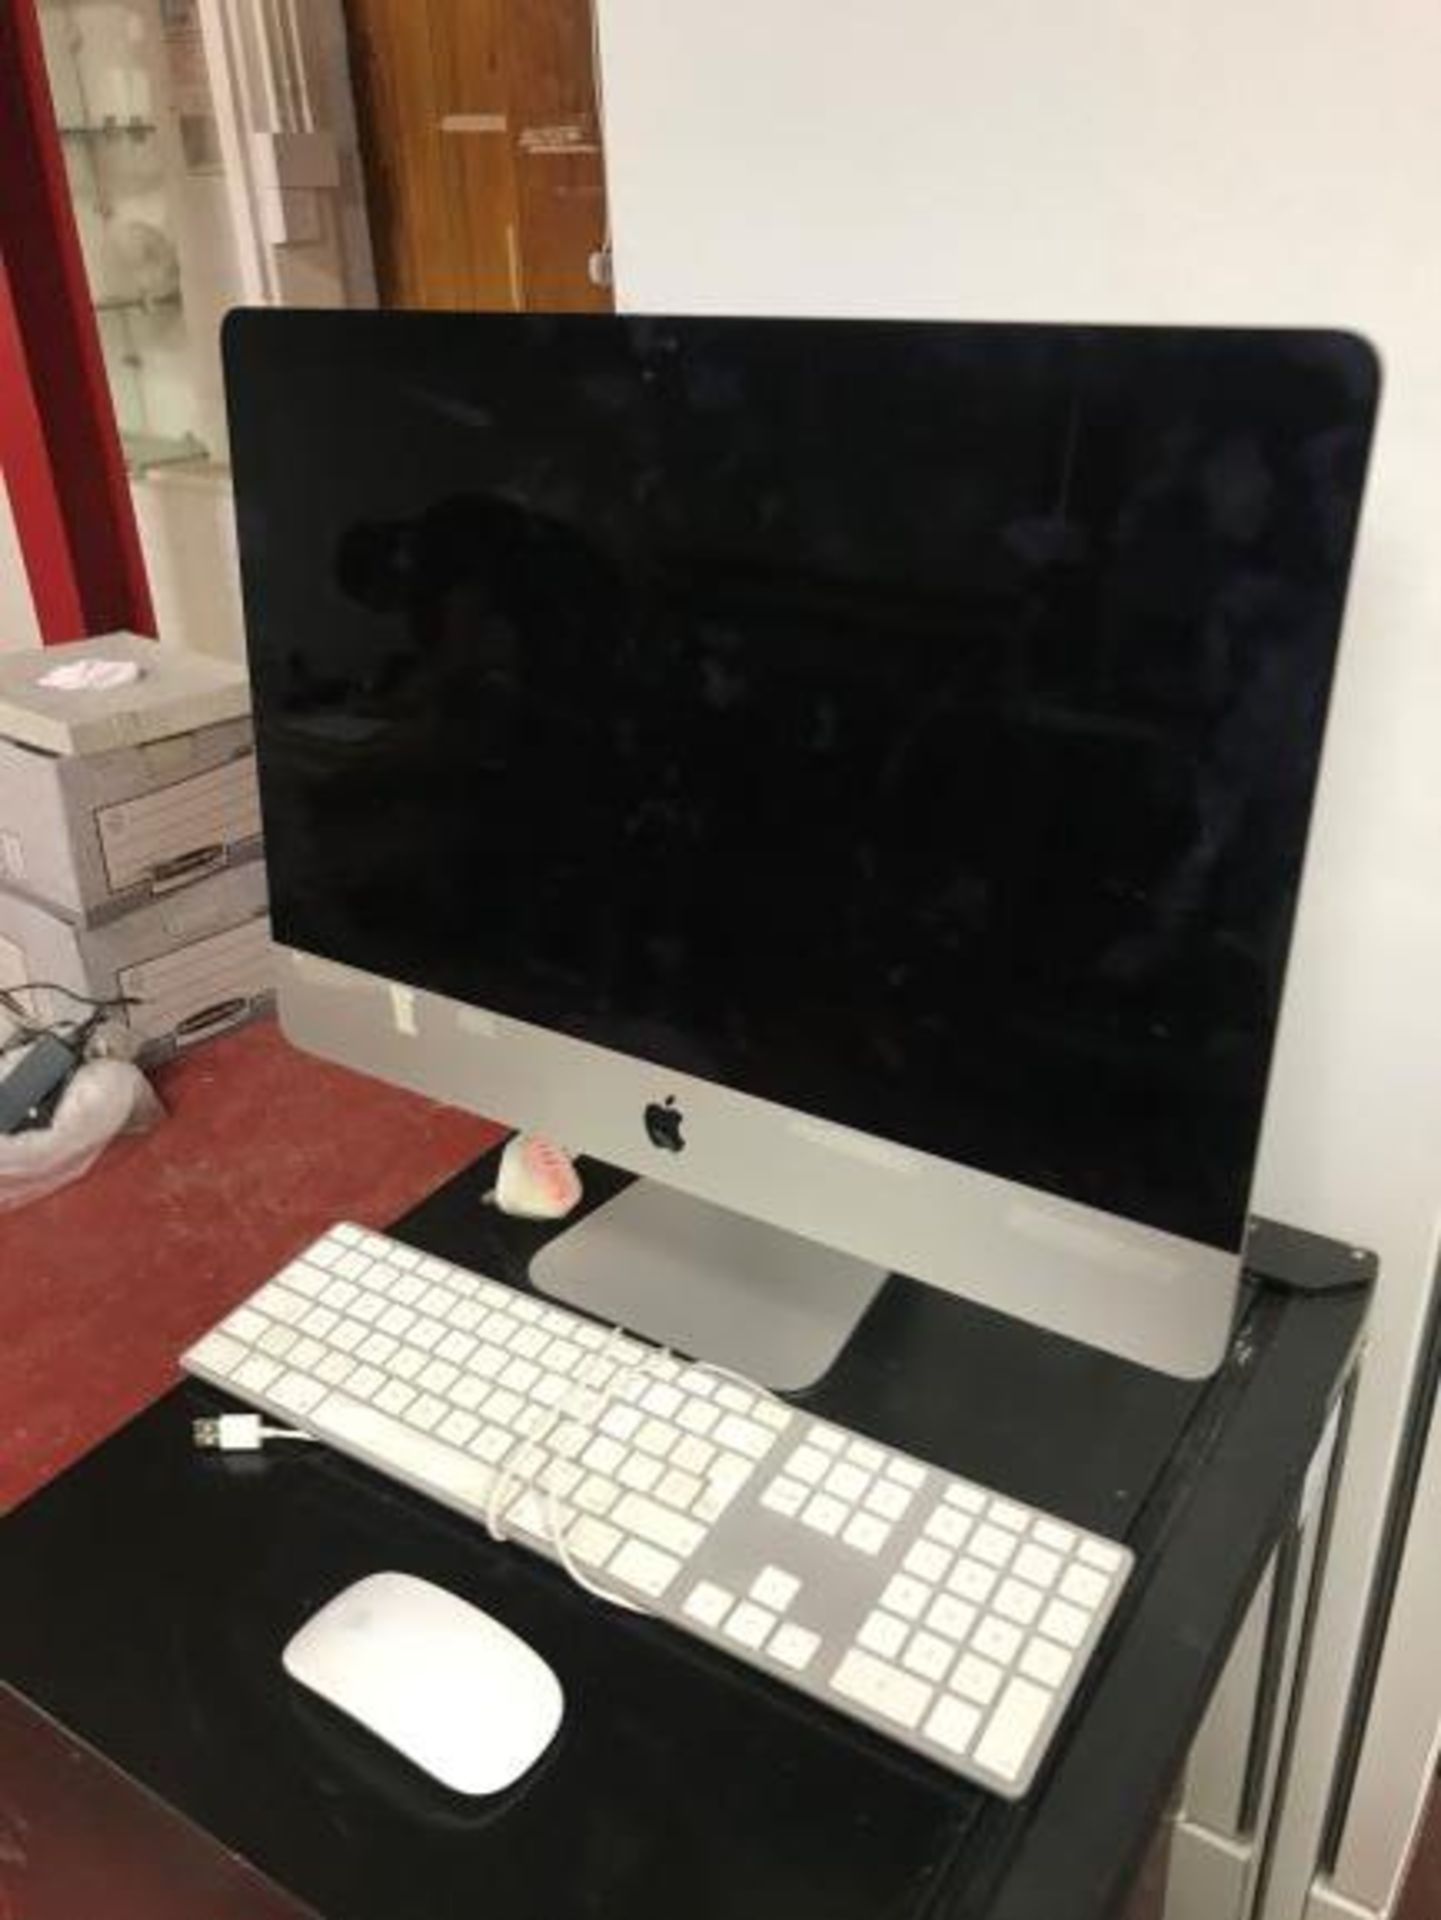 Apple iMac 21.5" core i5 late 2013 personal computer - Image 4 of 7